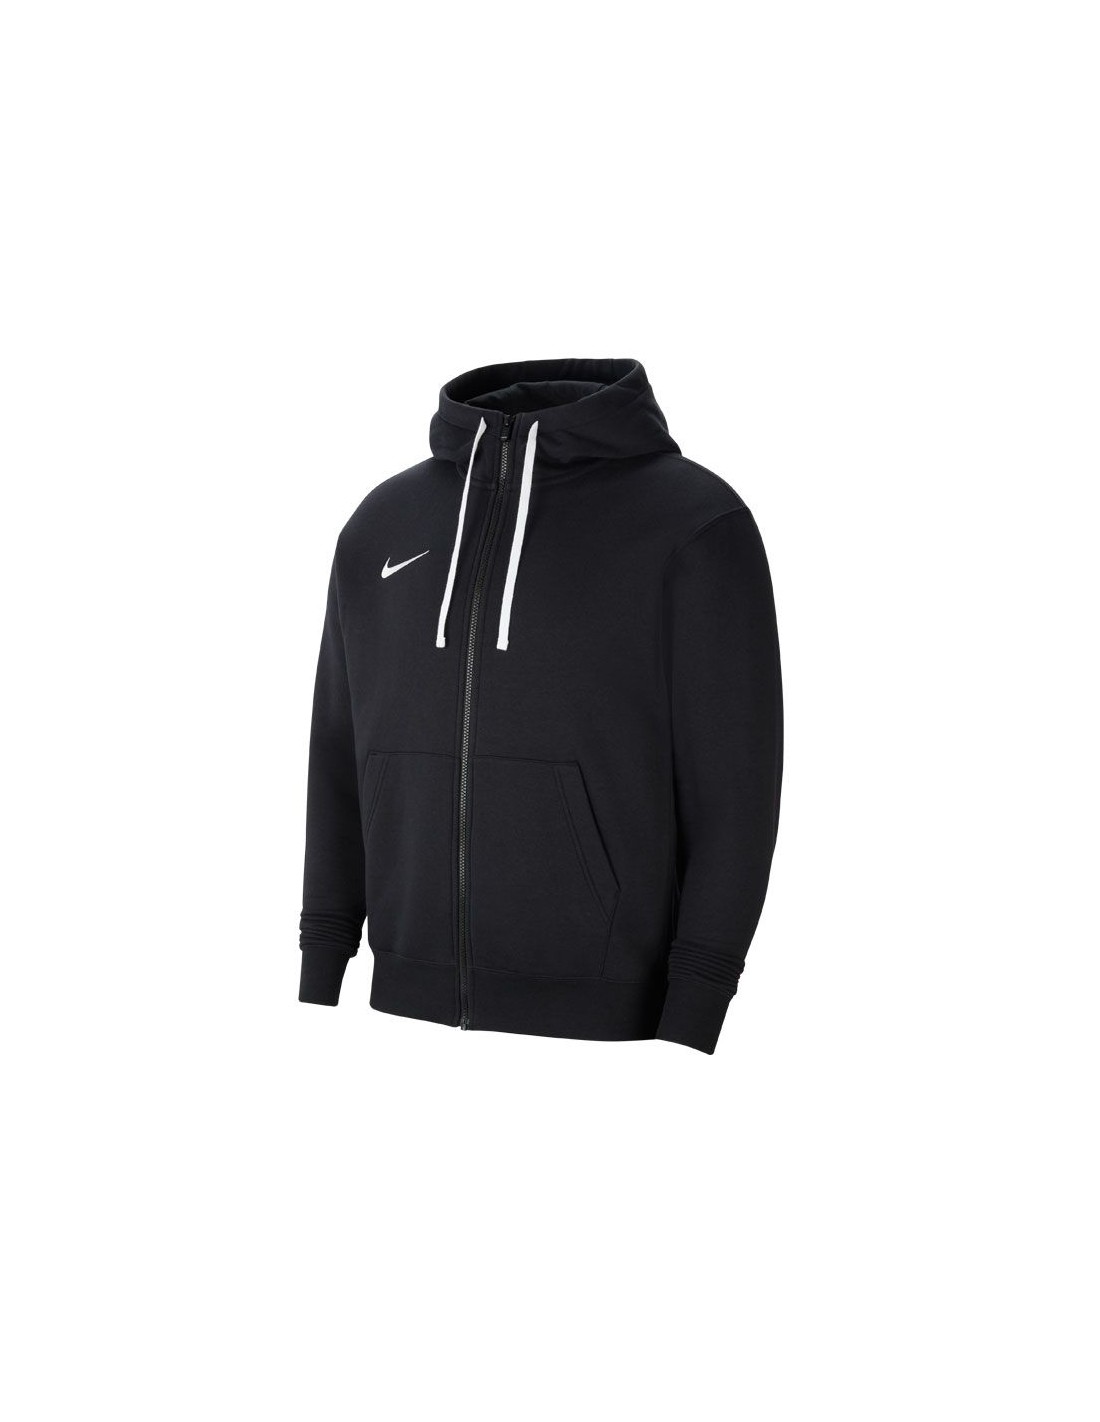 Nike Park 20 M sweatshirt CW6887-010